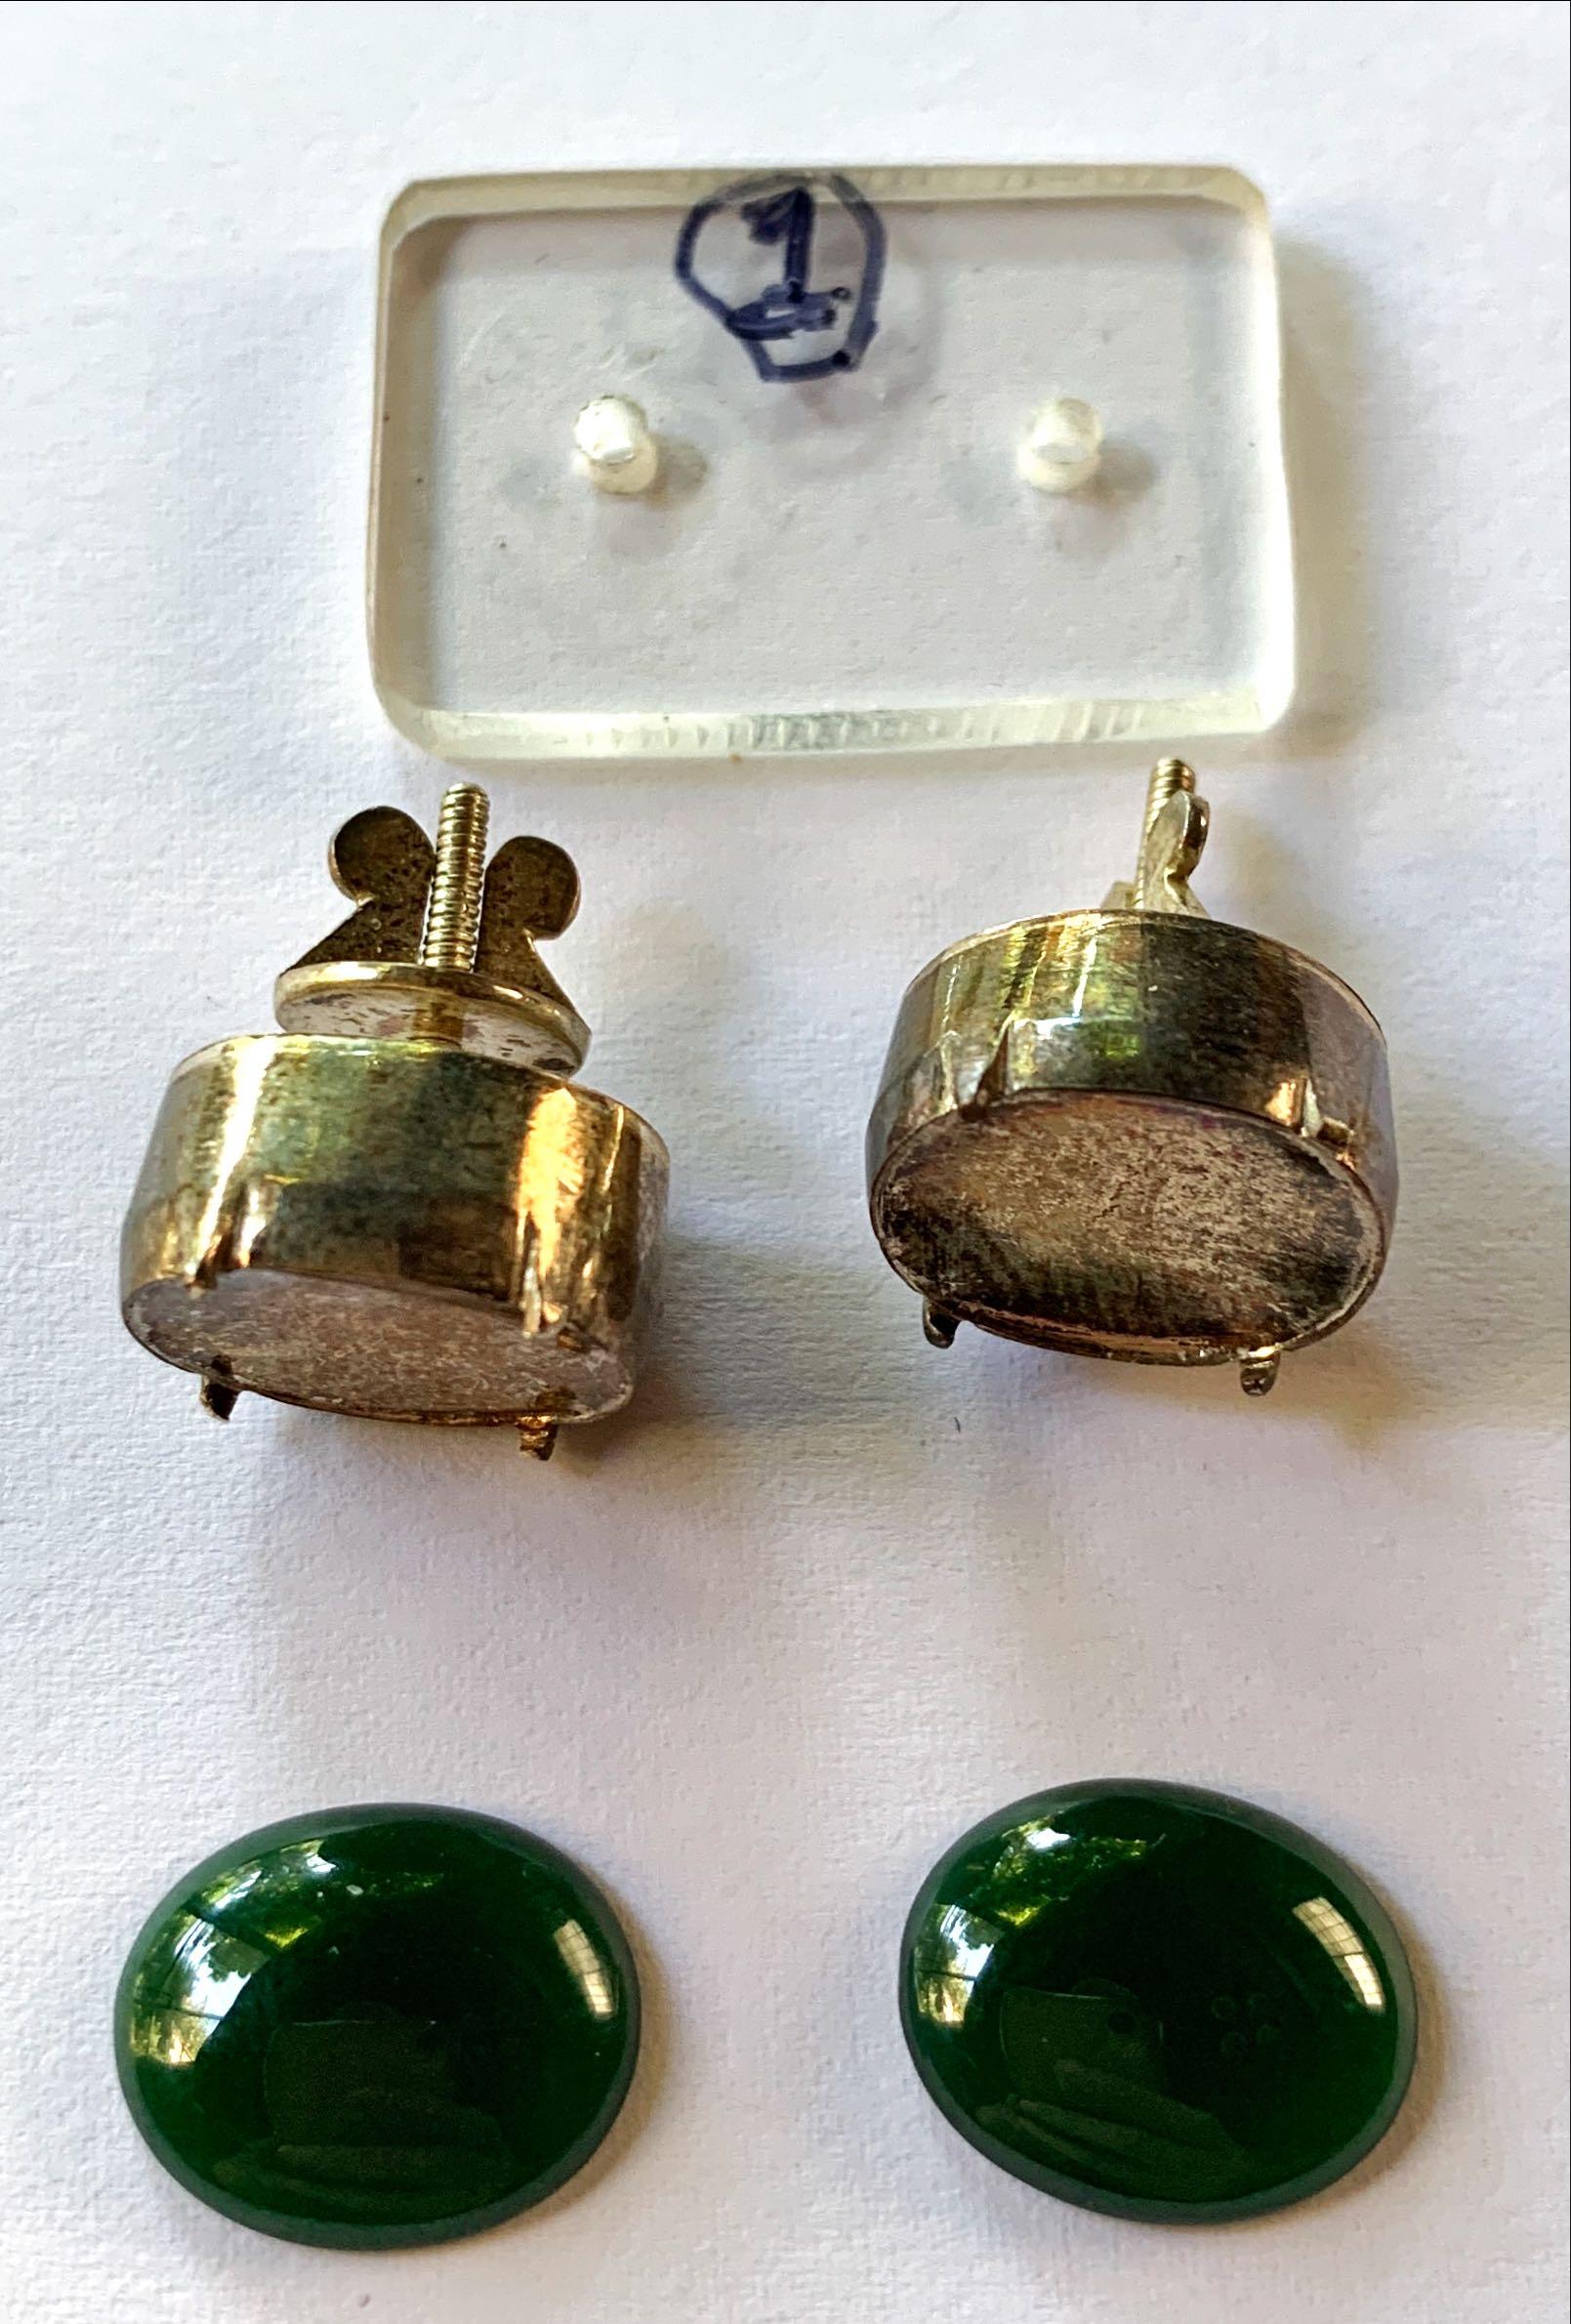 Green Rokan Myanmar Jadeite Loose Stones 2pcs 4.3/4.6 ct Grade A #1 For Sale 4